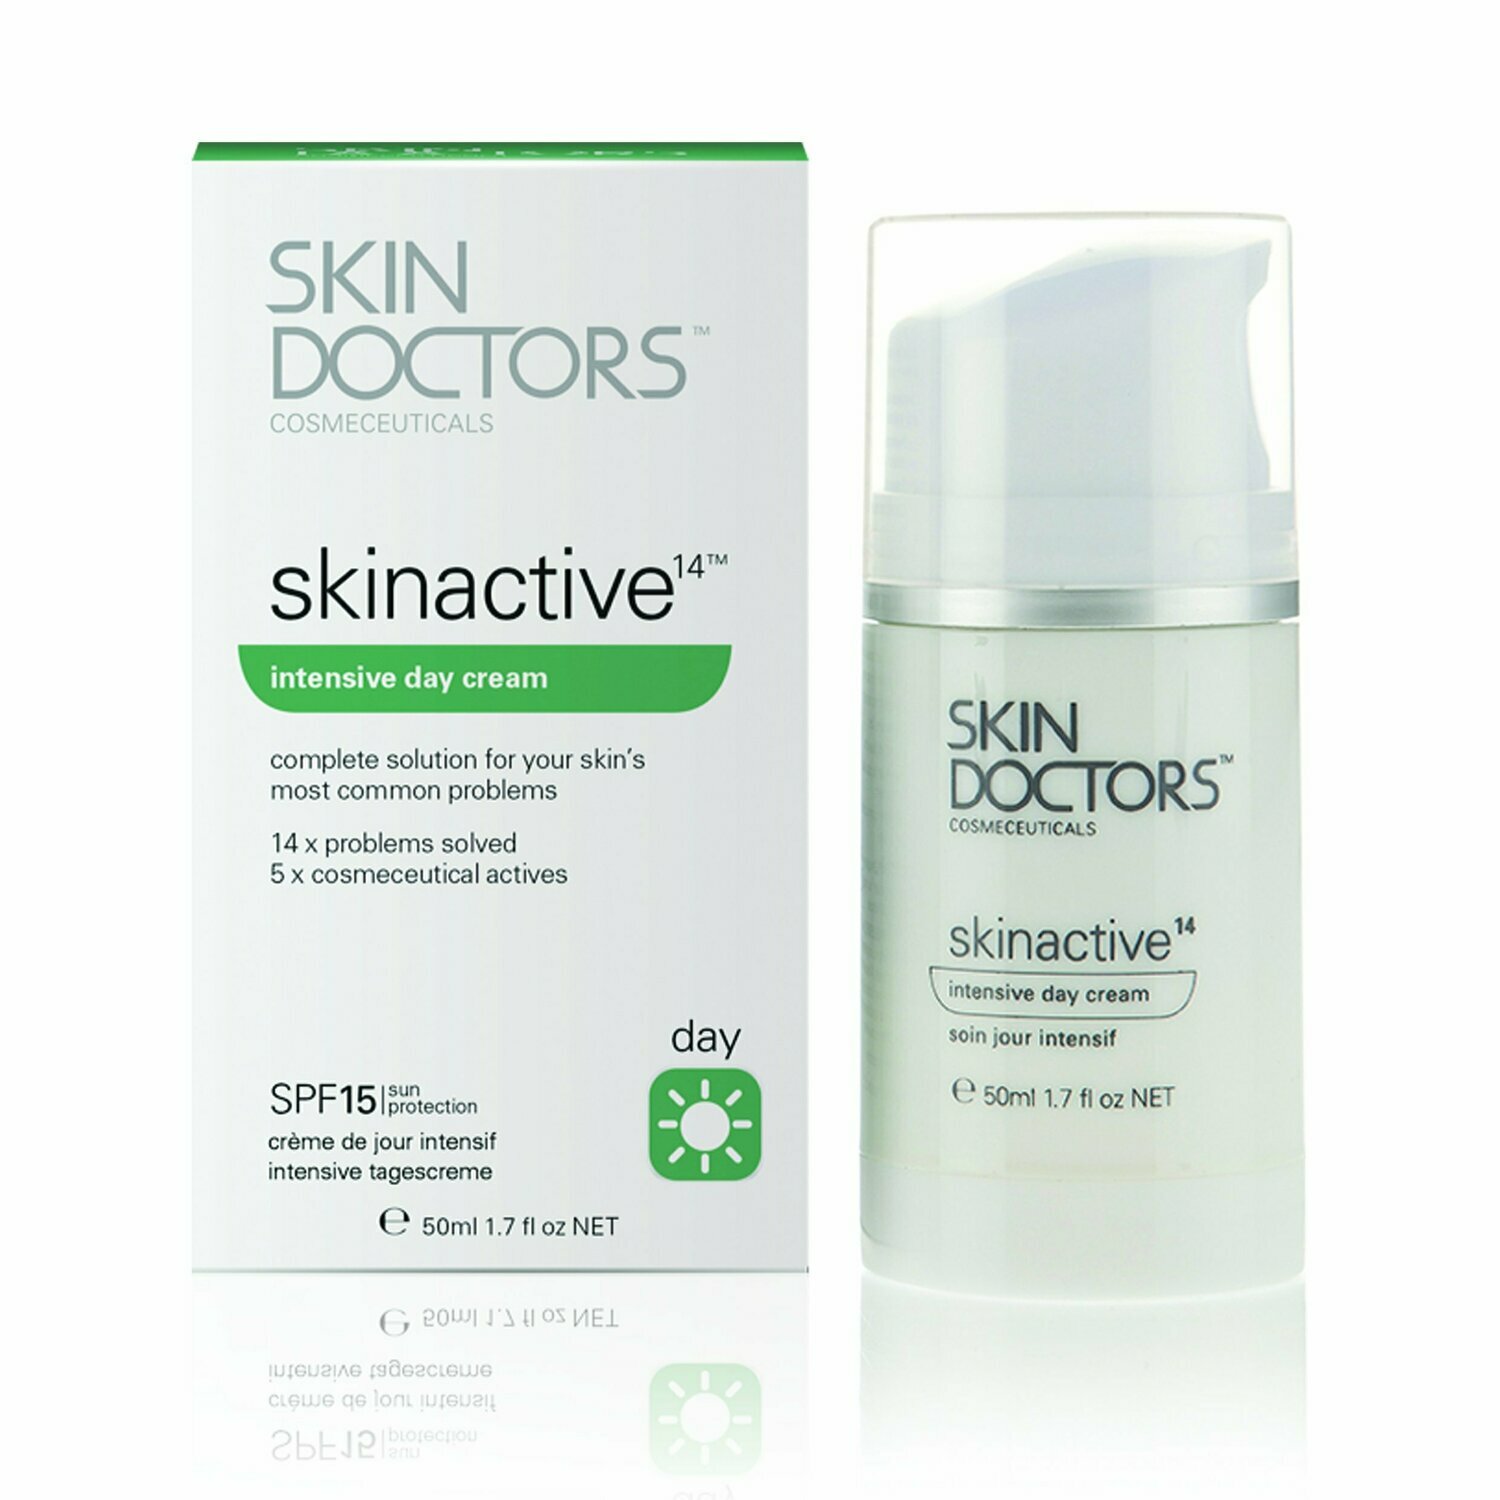 Skin Doctors Skinactive14™ Intensive Day Cream Интенсивный дневной крем